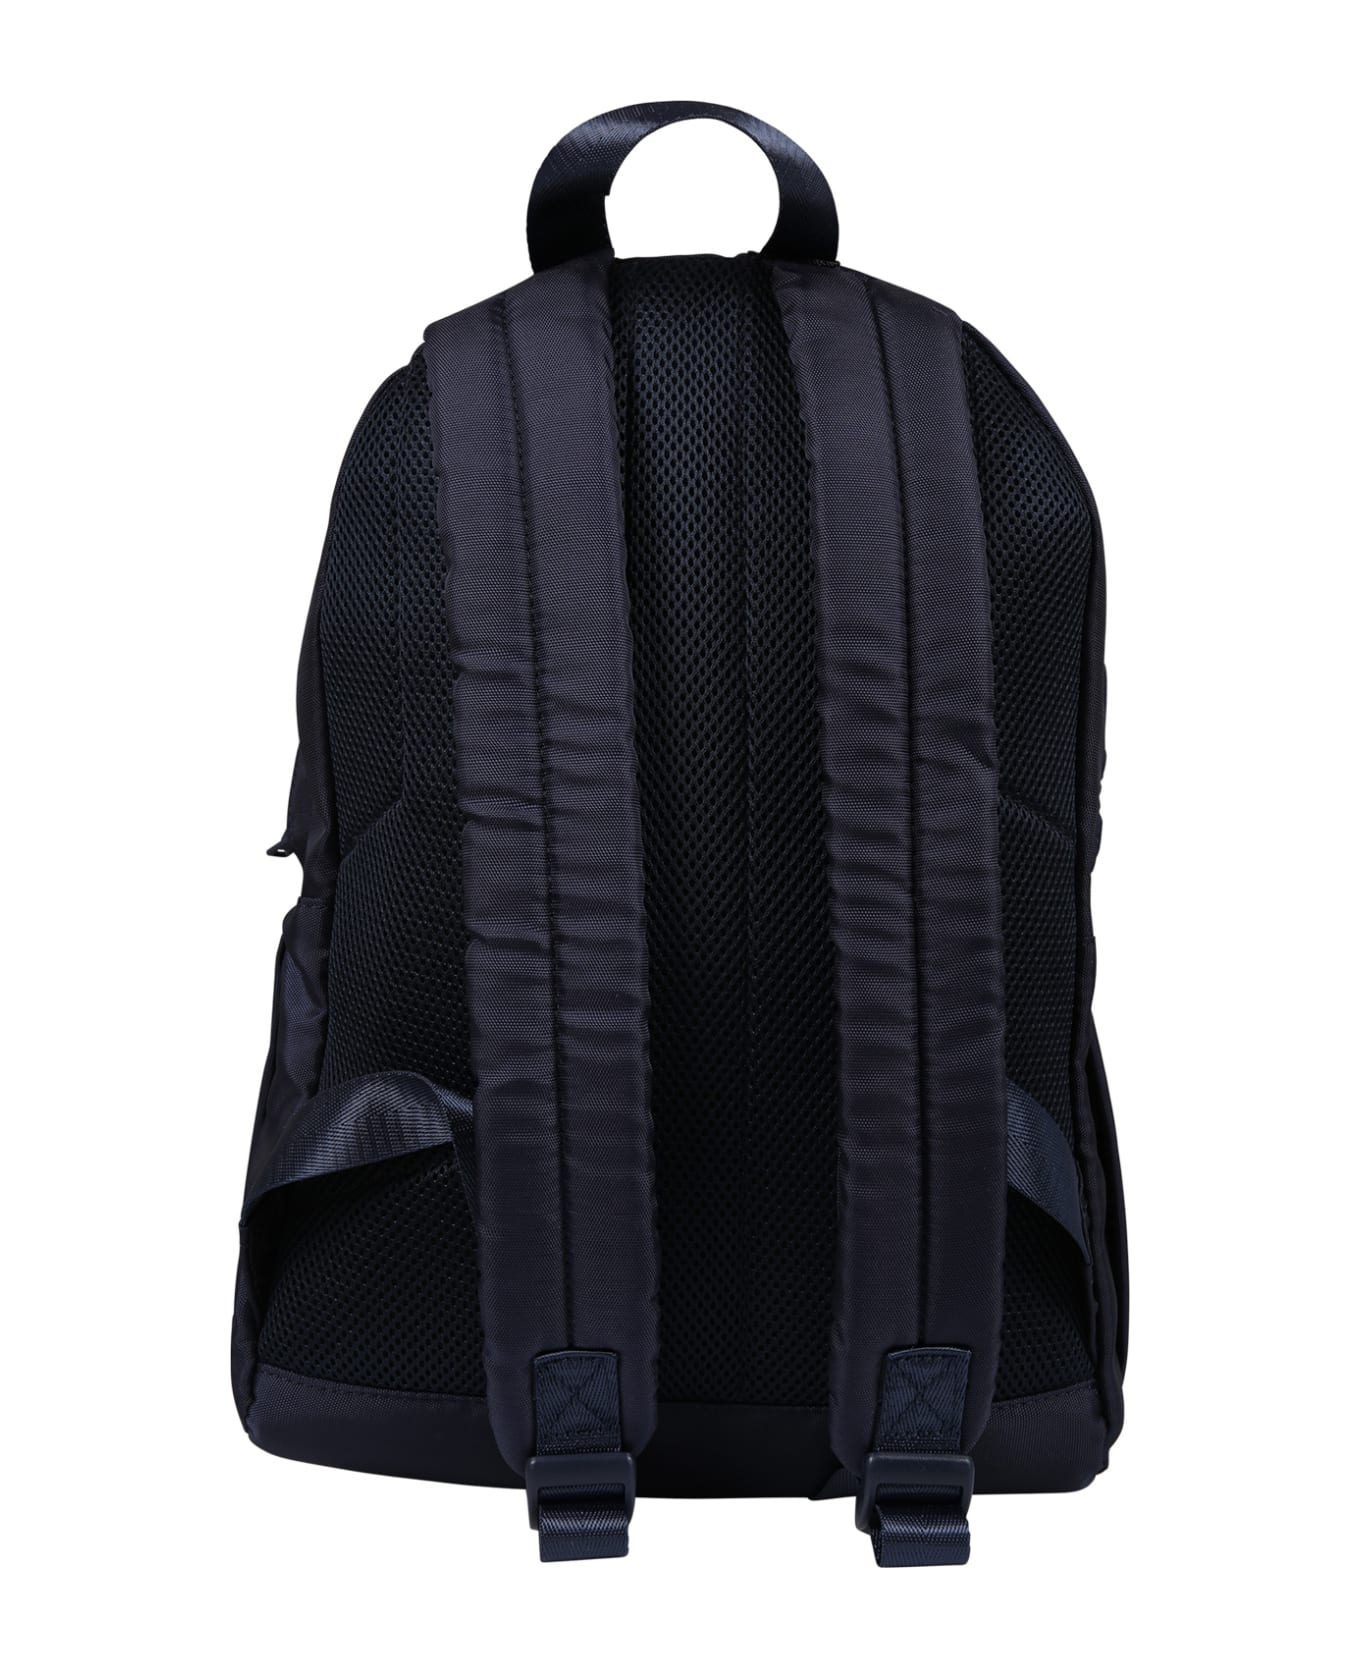 Hugo Boss Bleu Backpack For Boy With Logo - Blue